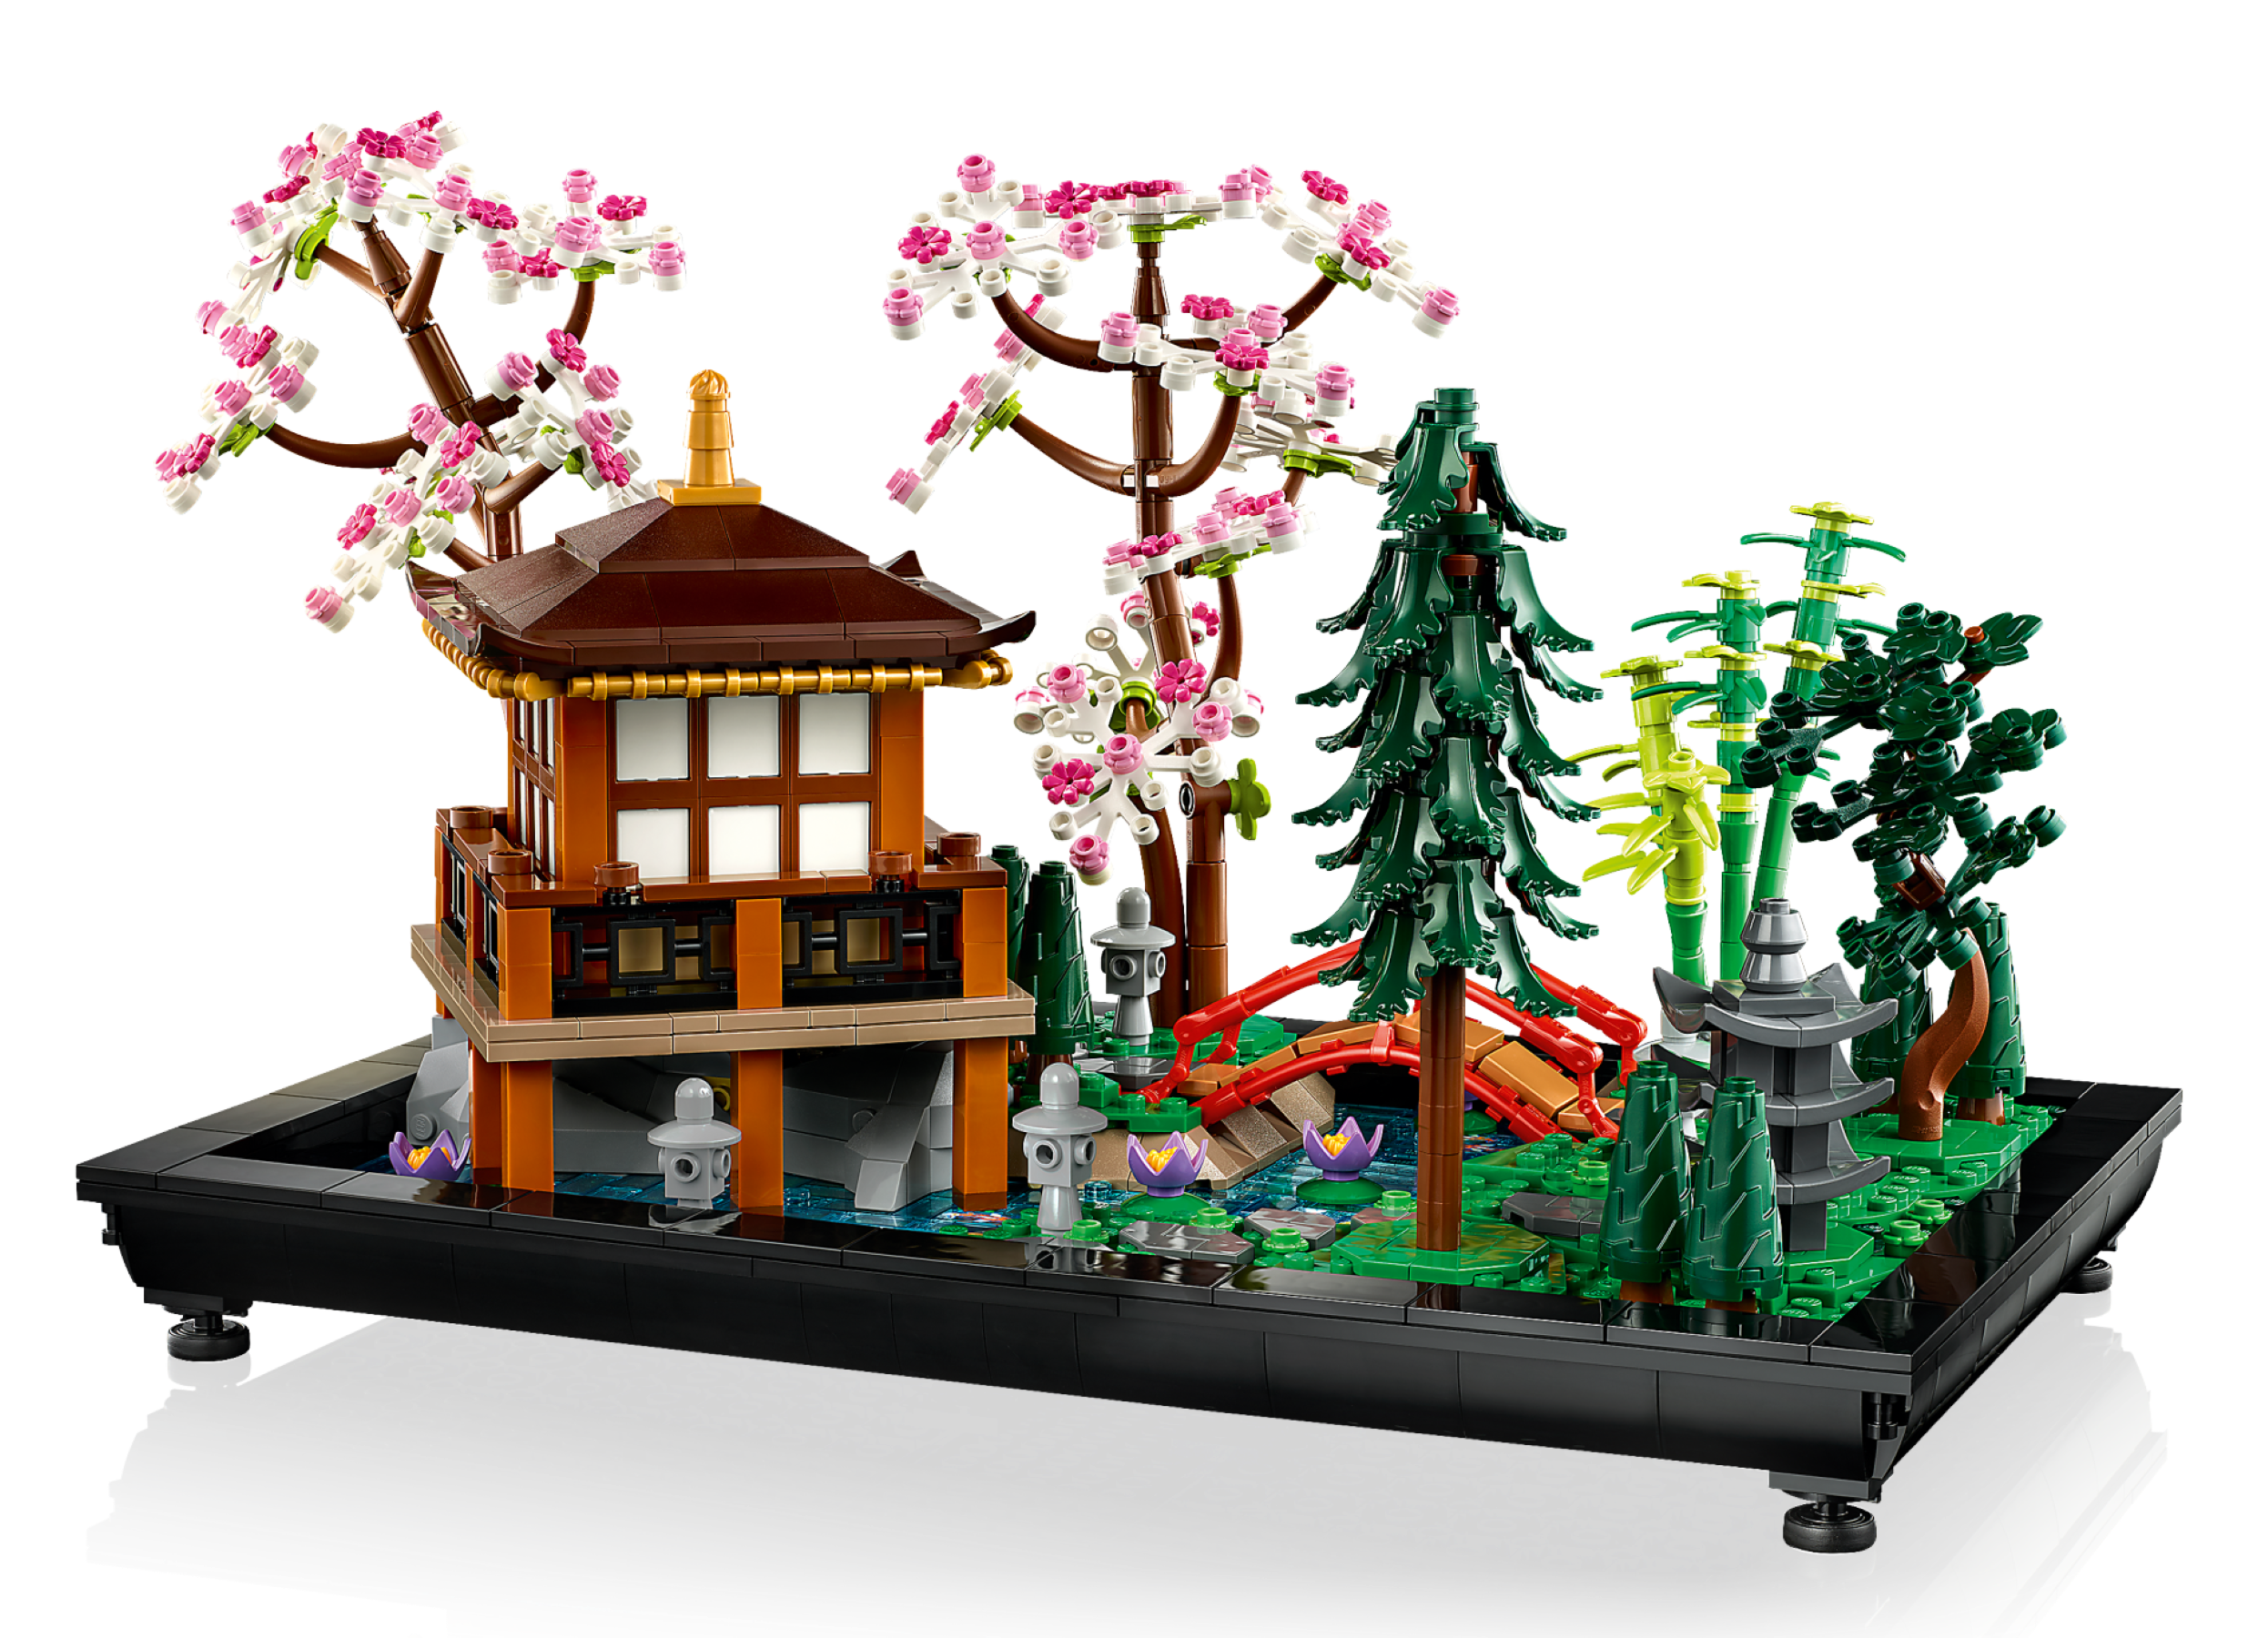 10315 - LEGO® Icons - Le Jardin Paisible LEGO : King Jouet, Lego